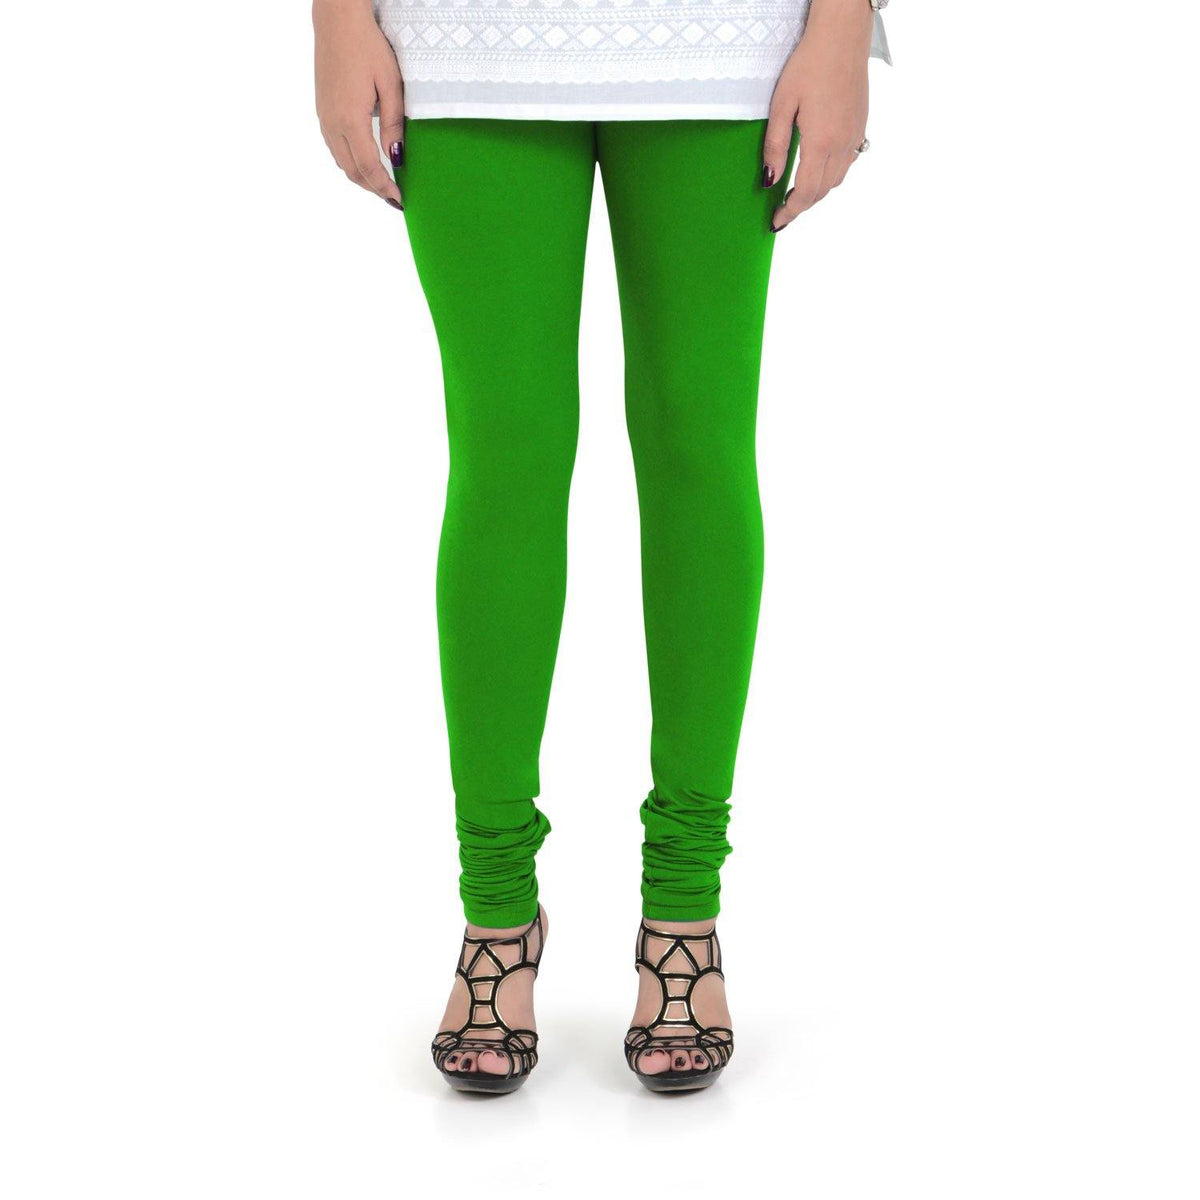 Vami Women's Cotton Stretchable Churidar Legging - Spectra Green